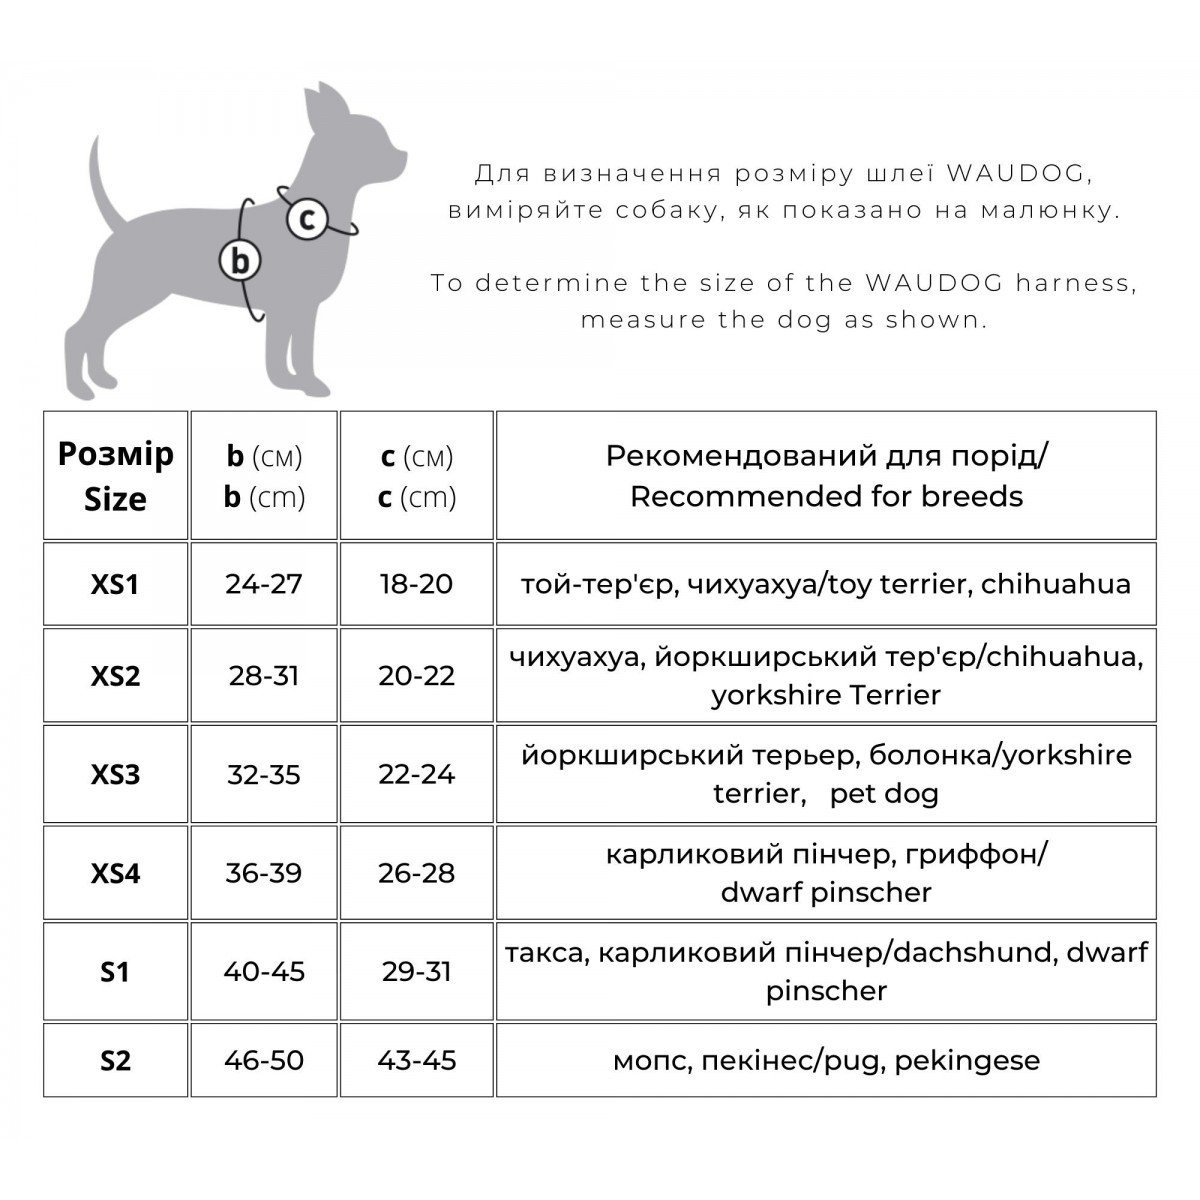 Шлея для собак мягкая Waudog Clothes, с QR паспортом, Вау, XS2, 28-31х20-22 см - фото 4